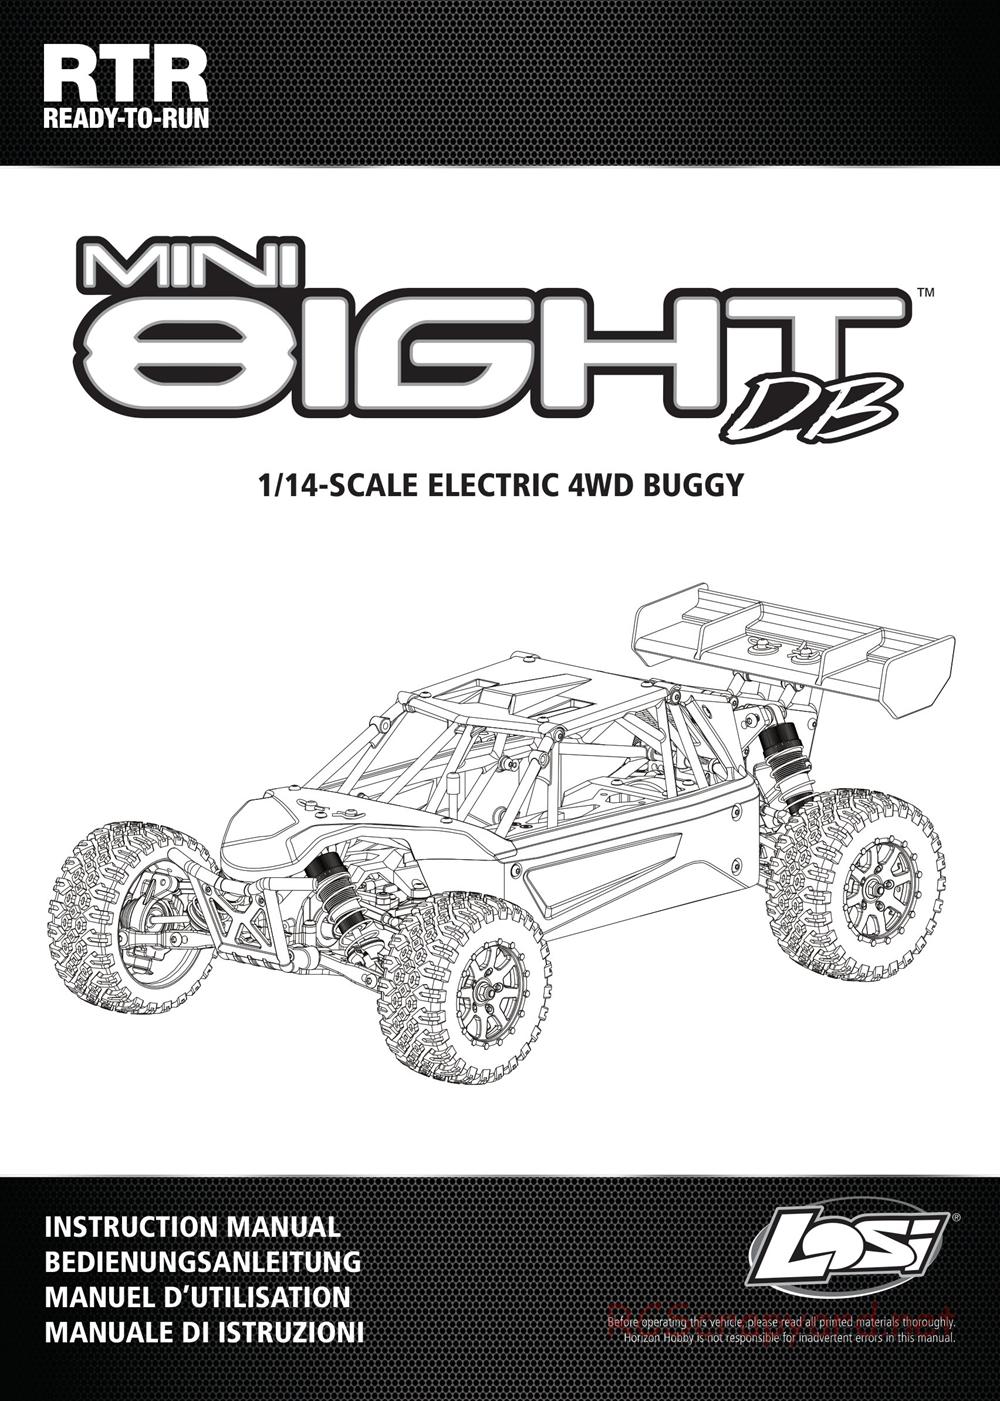 Team Losi - Mini 8ight DB - Manual - Page 1